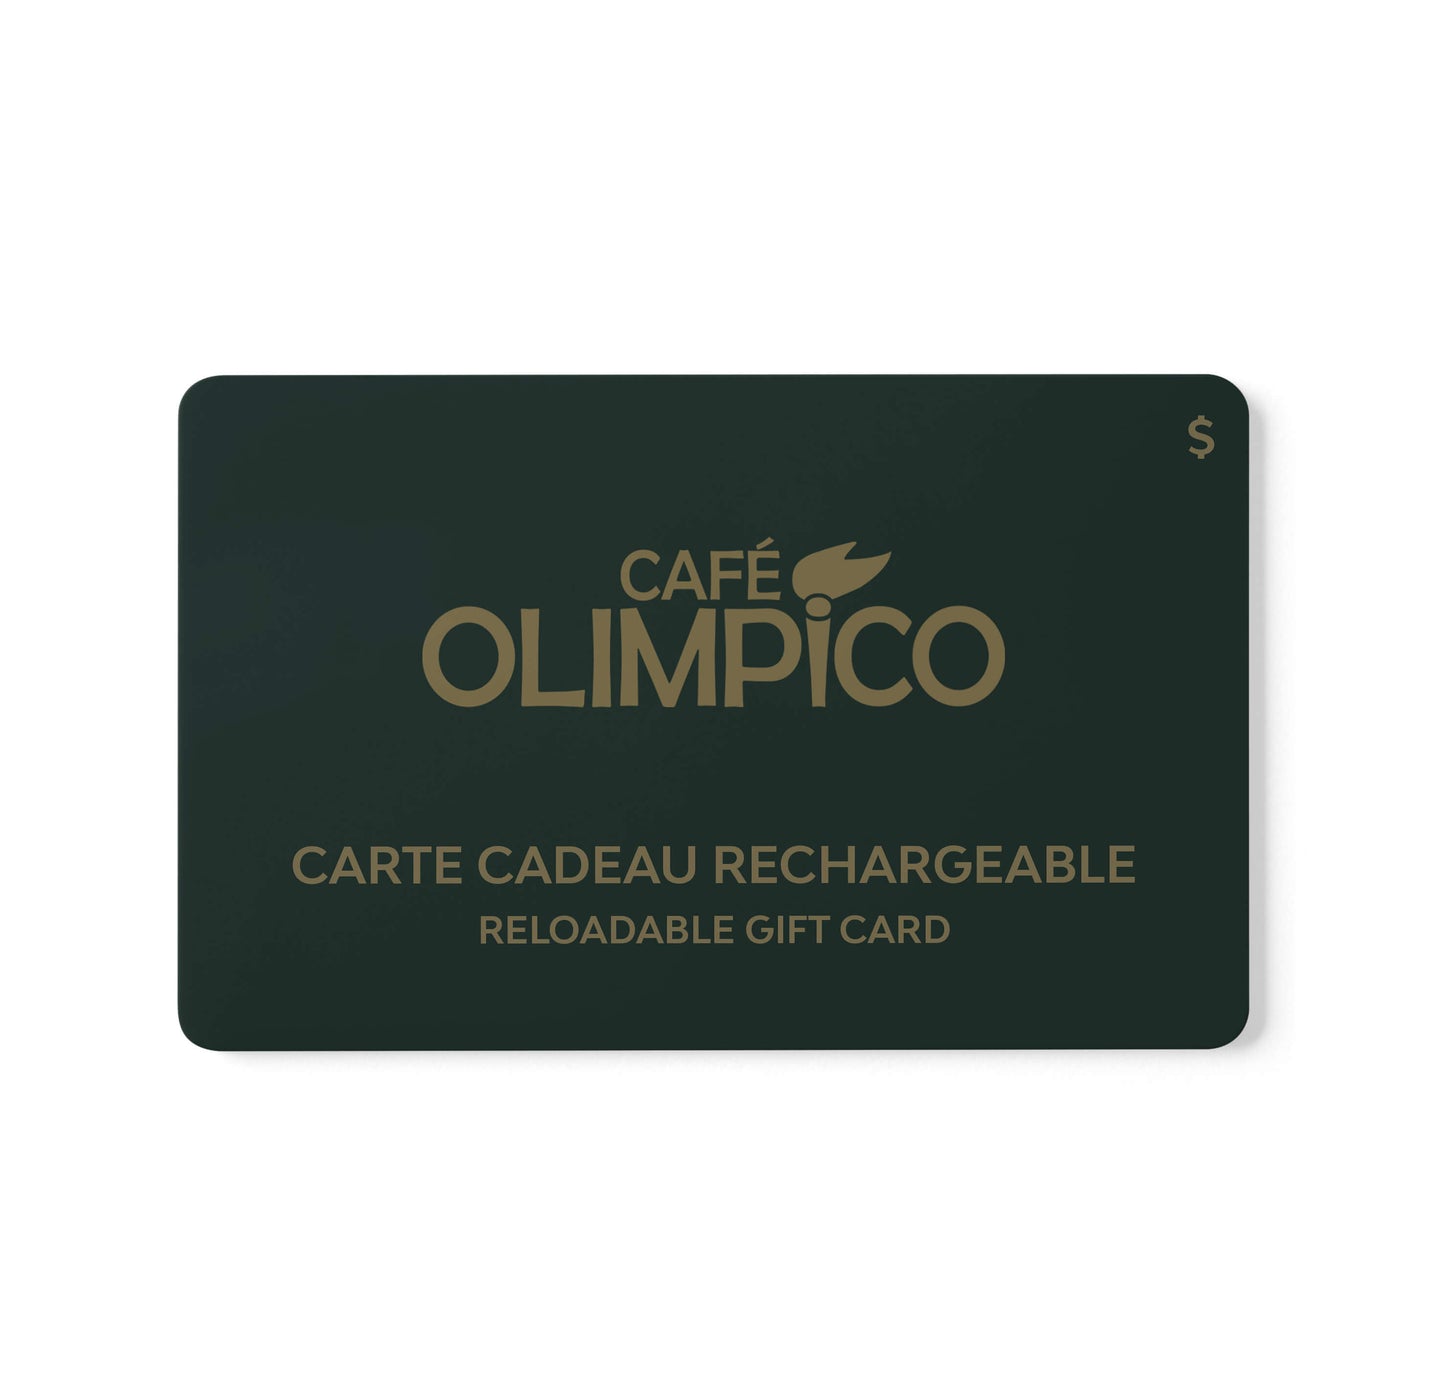 Cafe Olimpico Coffee Shop Gift Card